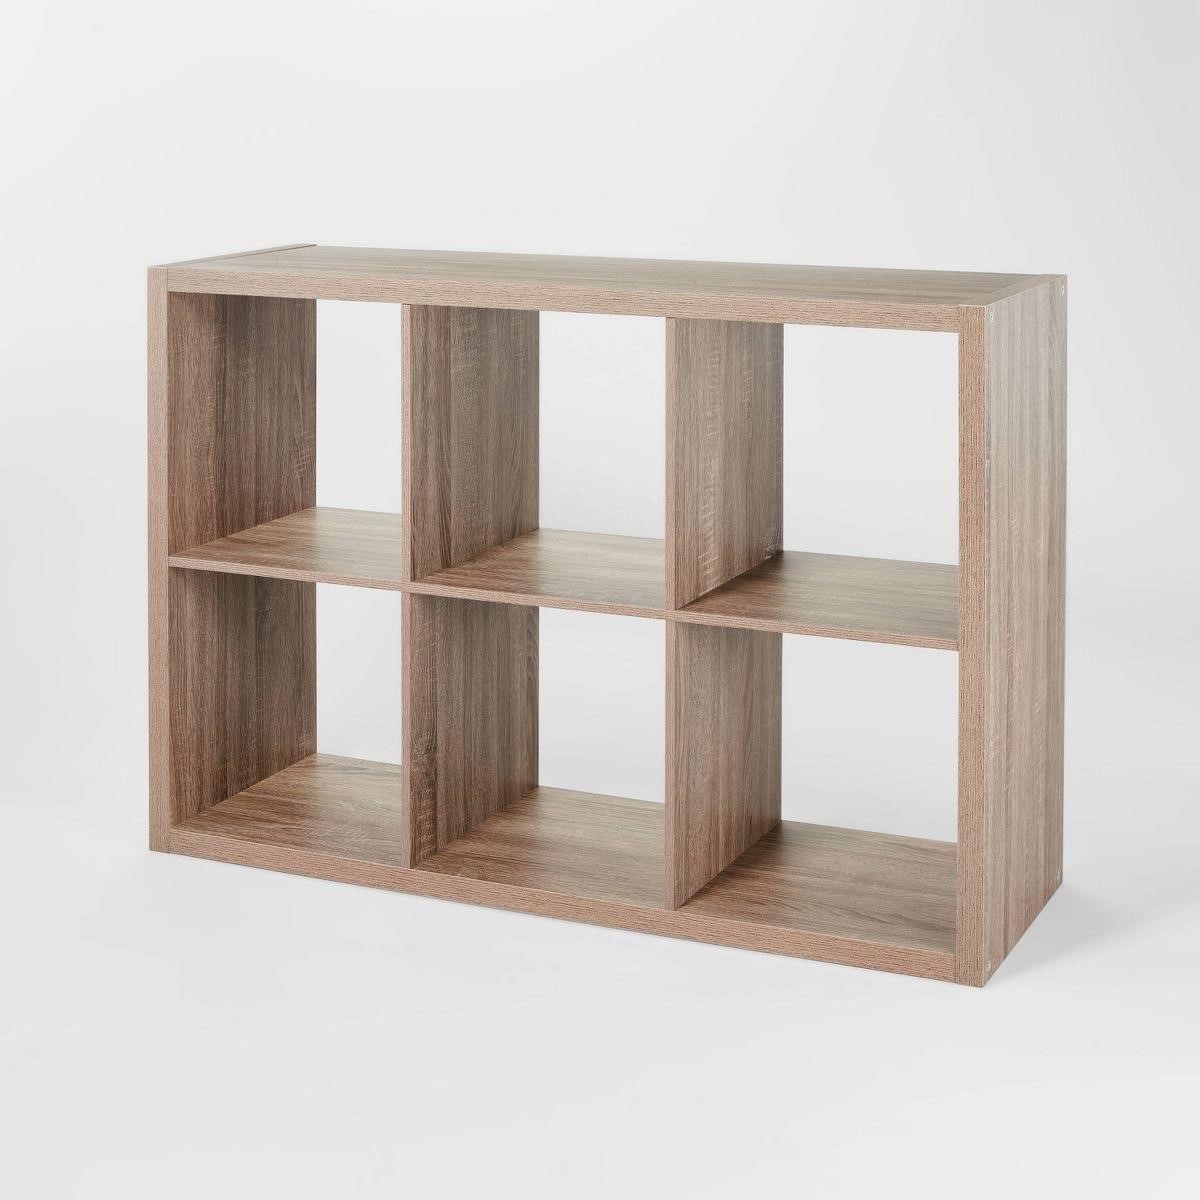 6 cube organizer shelf - weathered gray